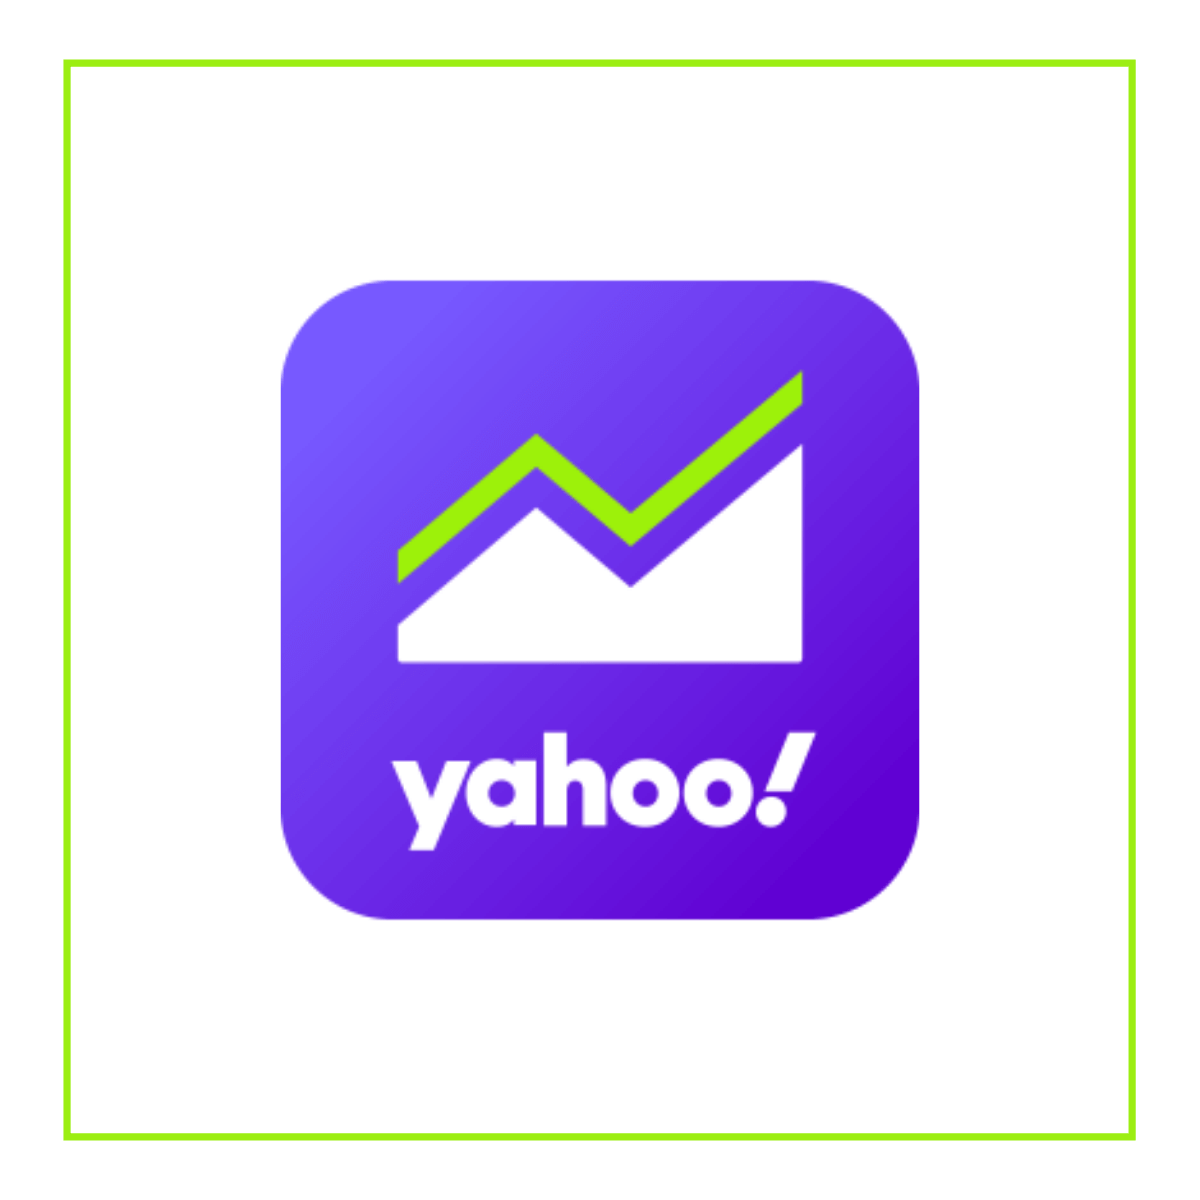 Yahoo Finance - Stock Market – Apps on Google Play